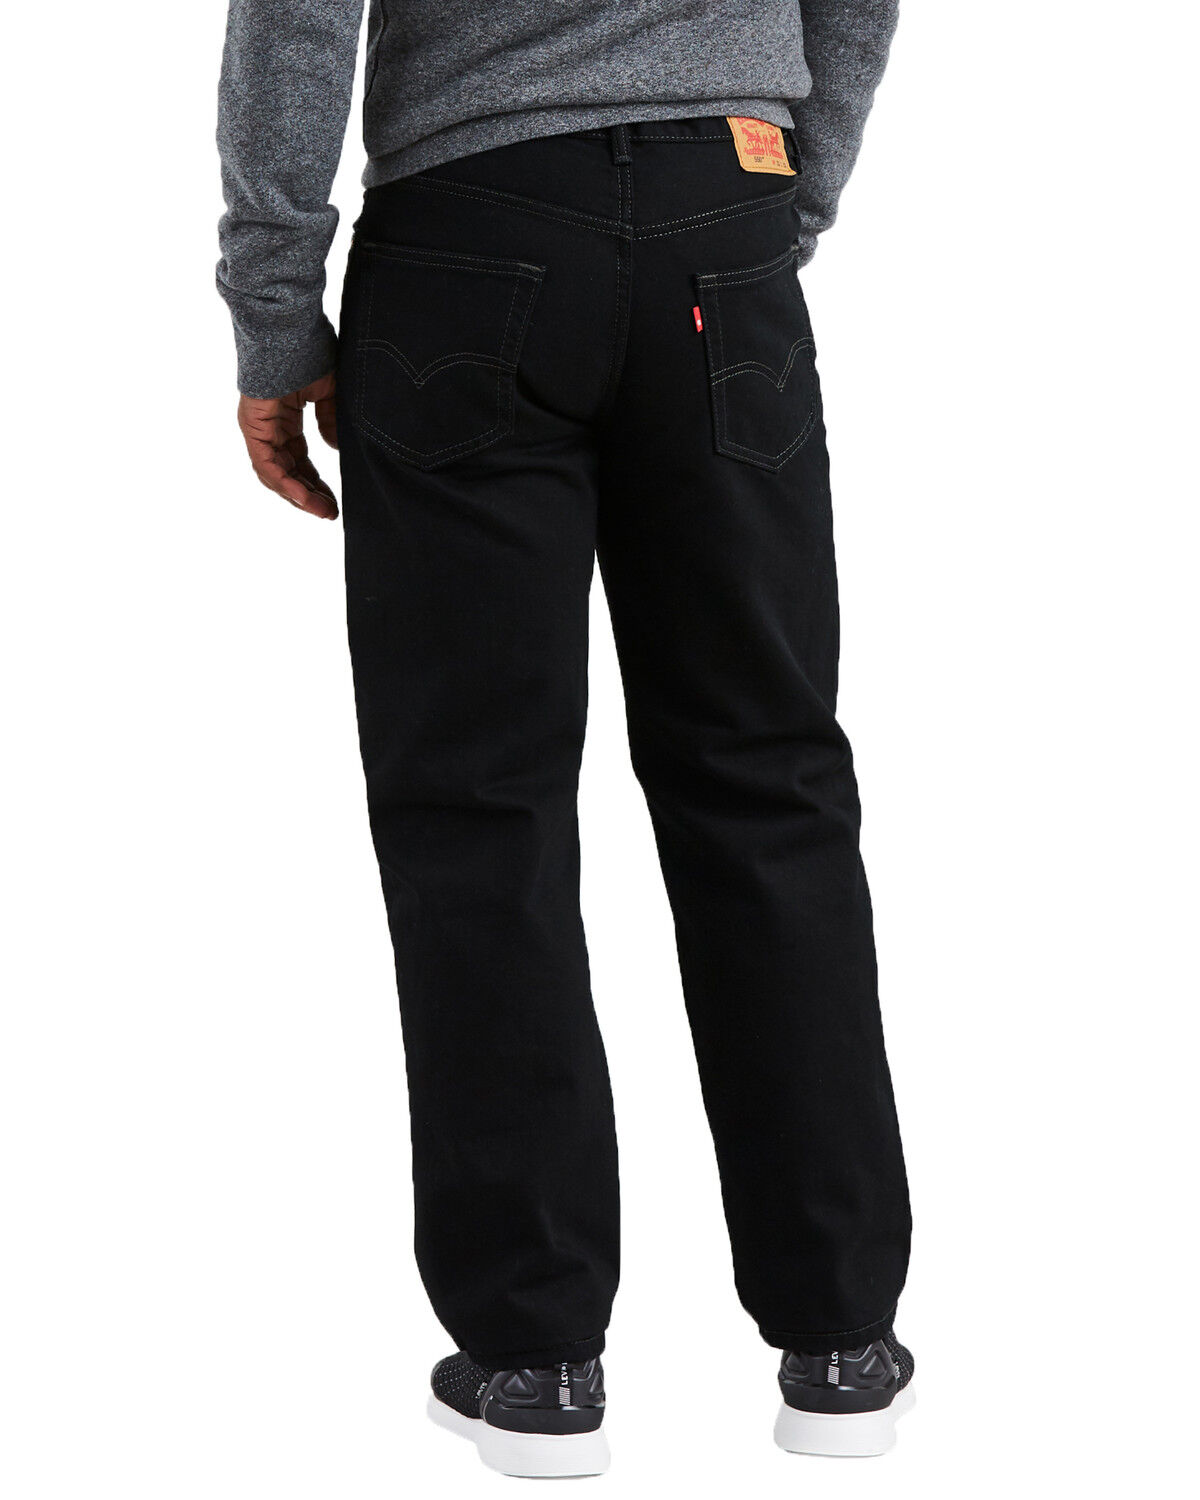 Levis Men's 550 Black Relaxed Fit Jeans 